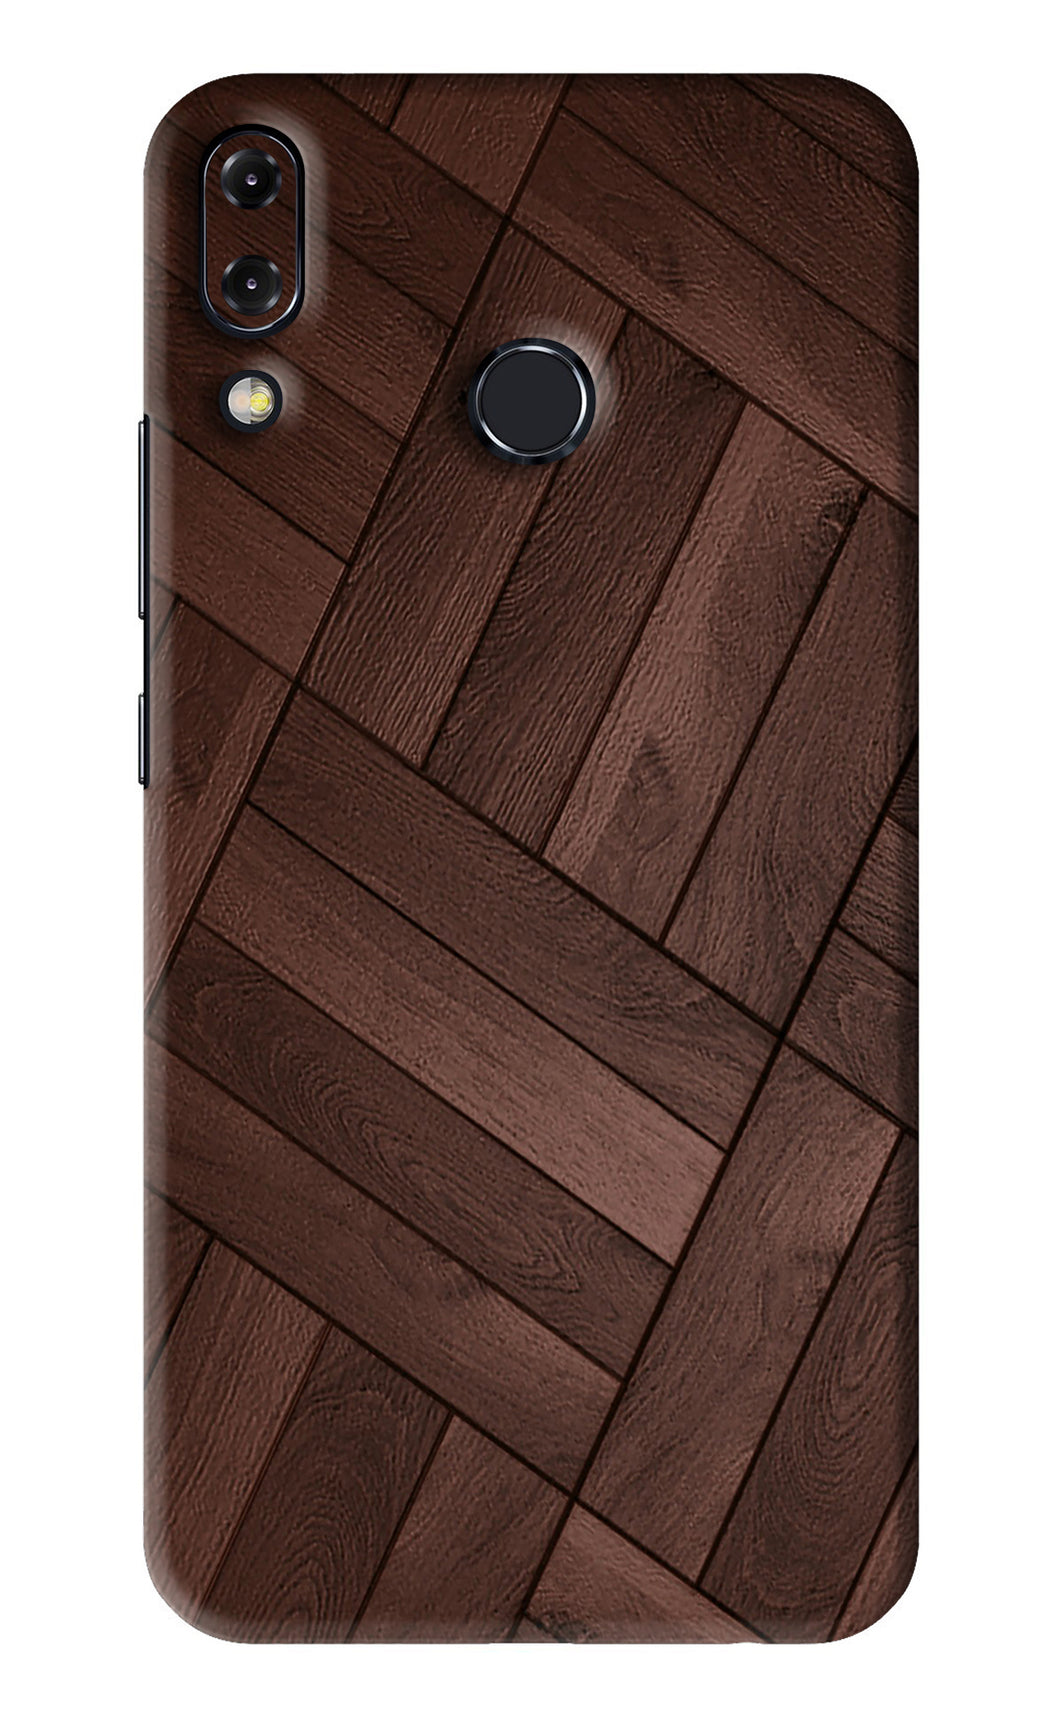 Wooden Texture Design Asus Zenfone 5Z Back Skin Wrap